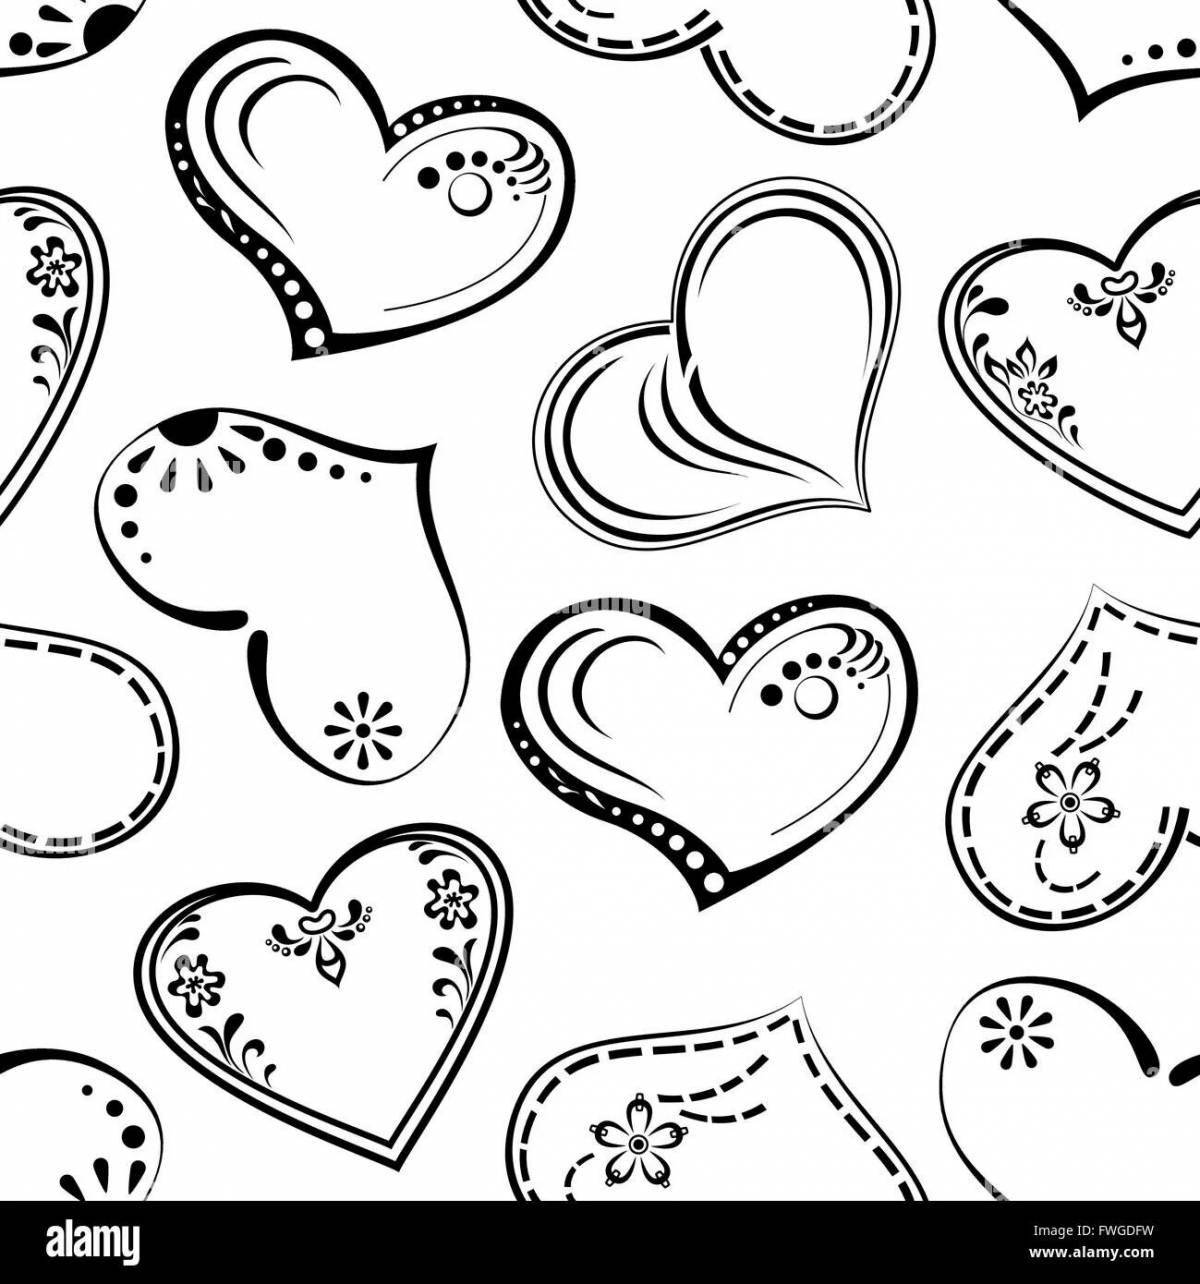 Joyful heart lot coloring page